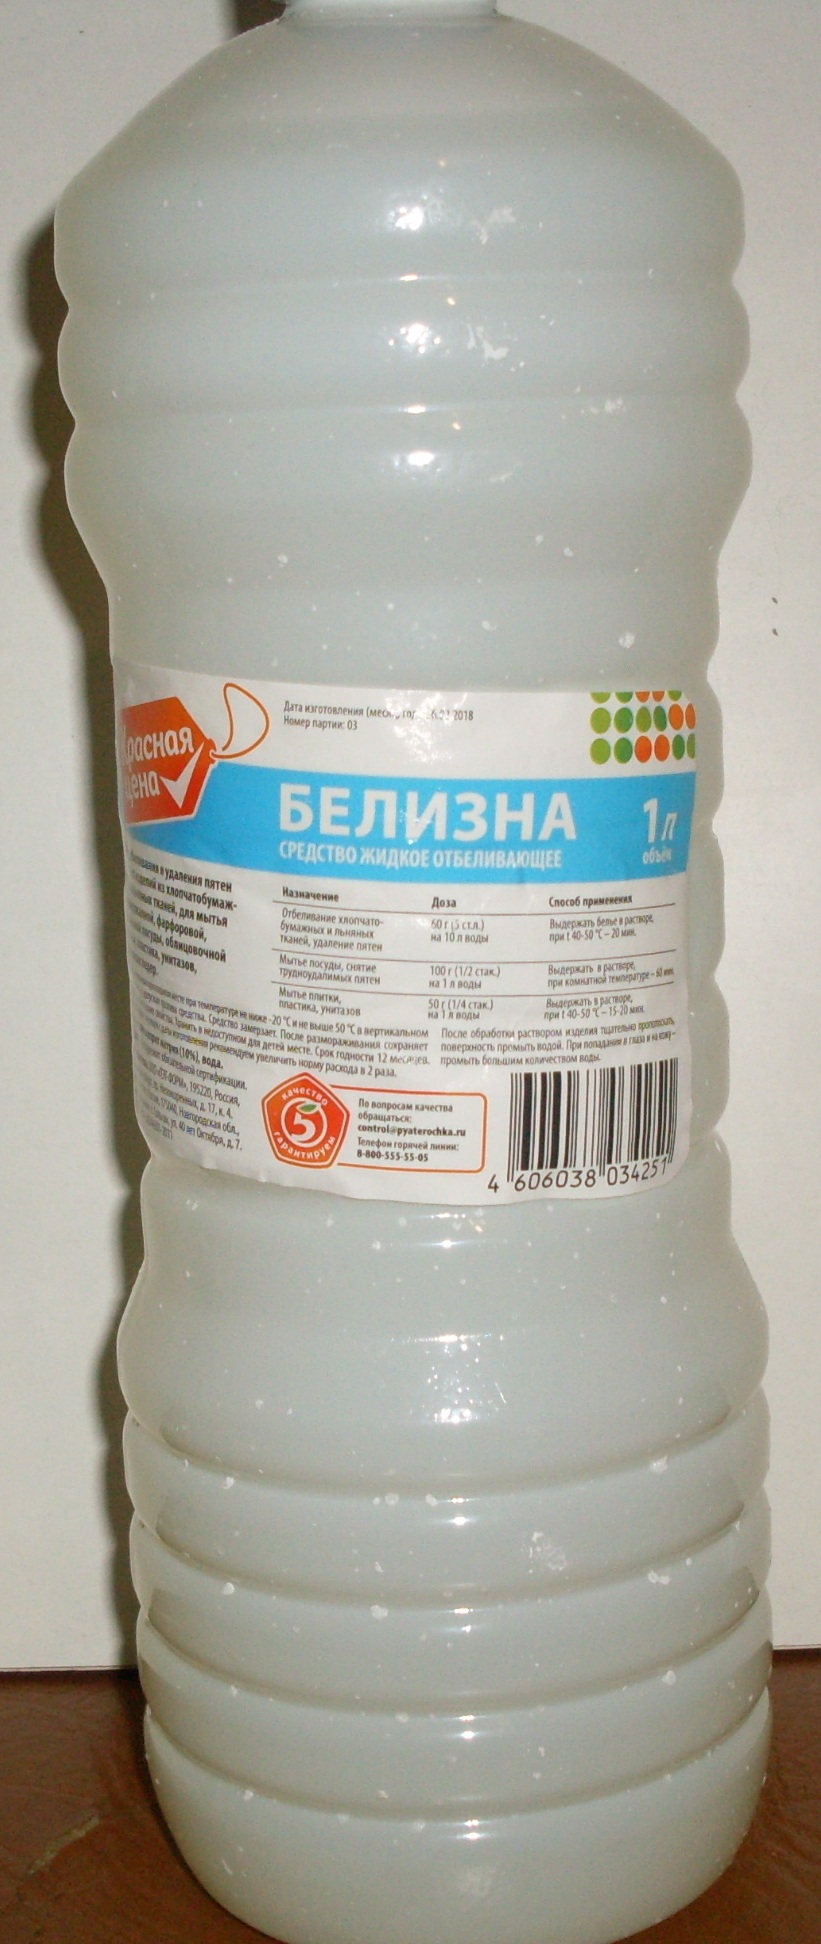        ''''. Determination of sodium hypochlorite in bleach ''Belizna''